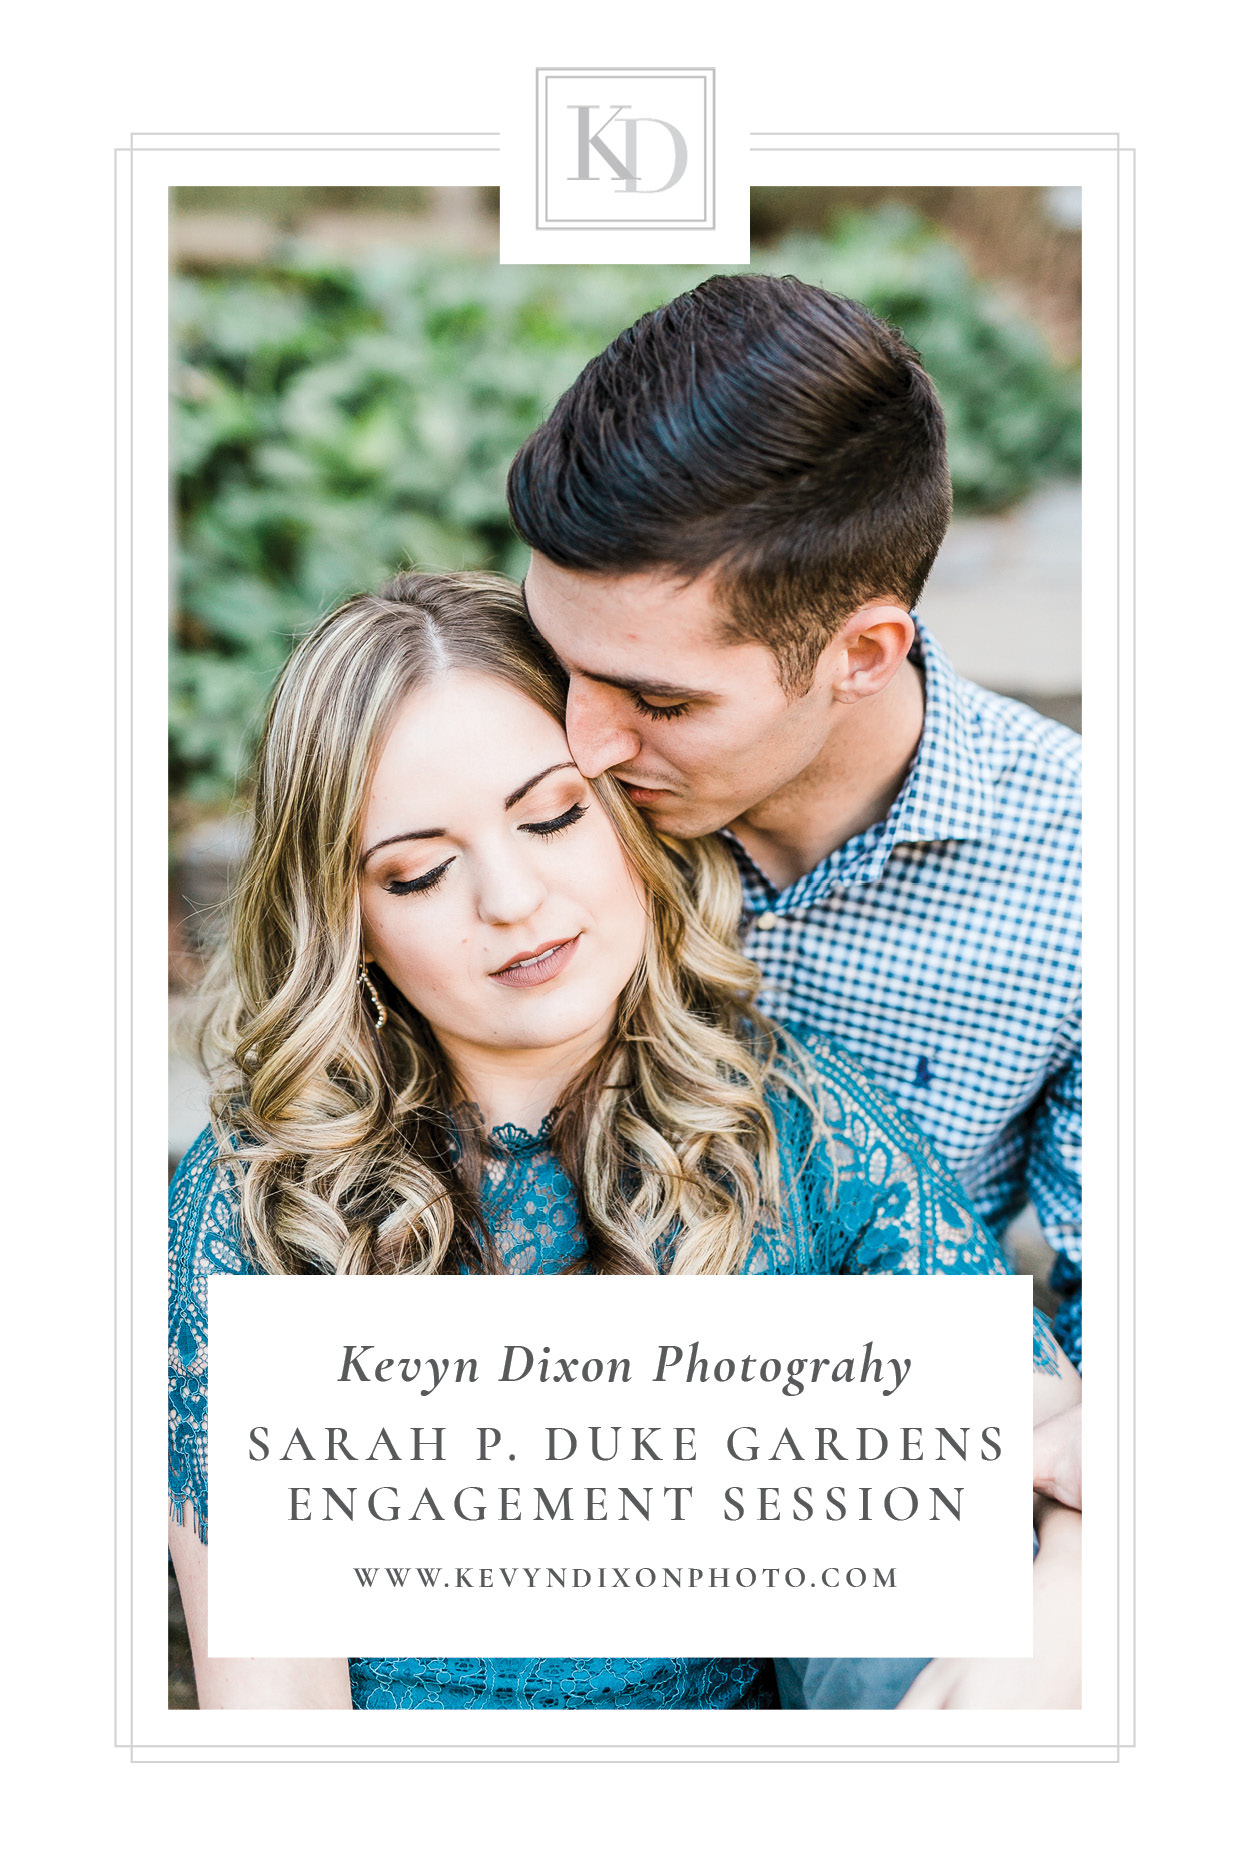 Sarah P. Duke Gardens Engagement Session